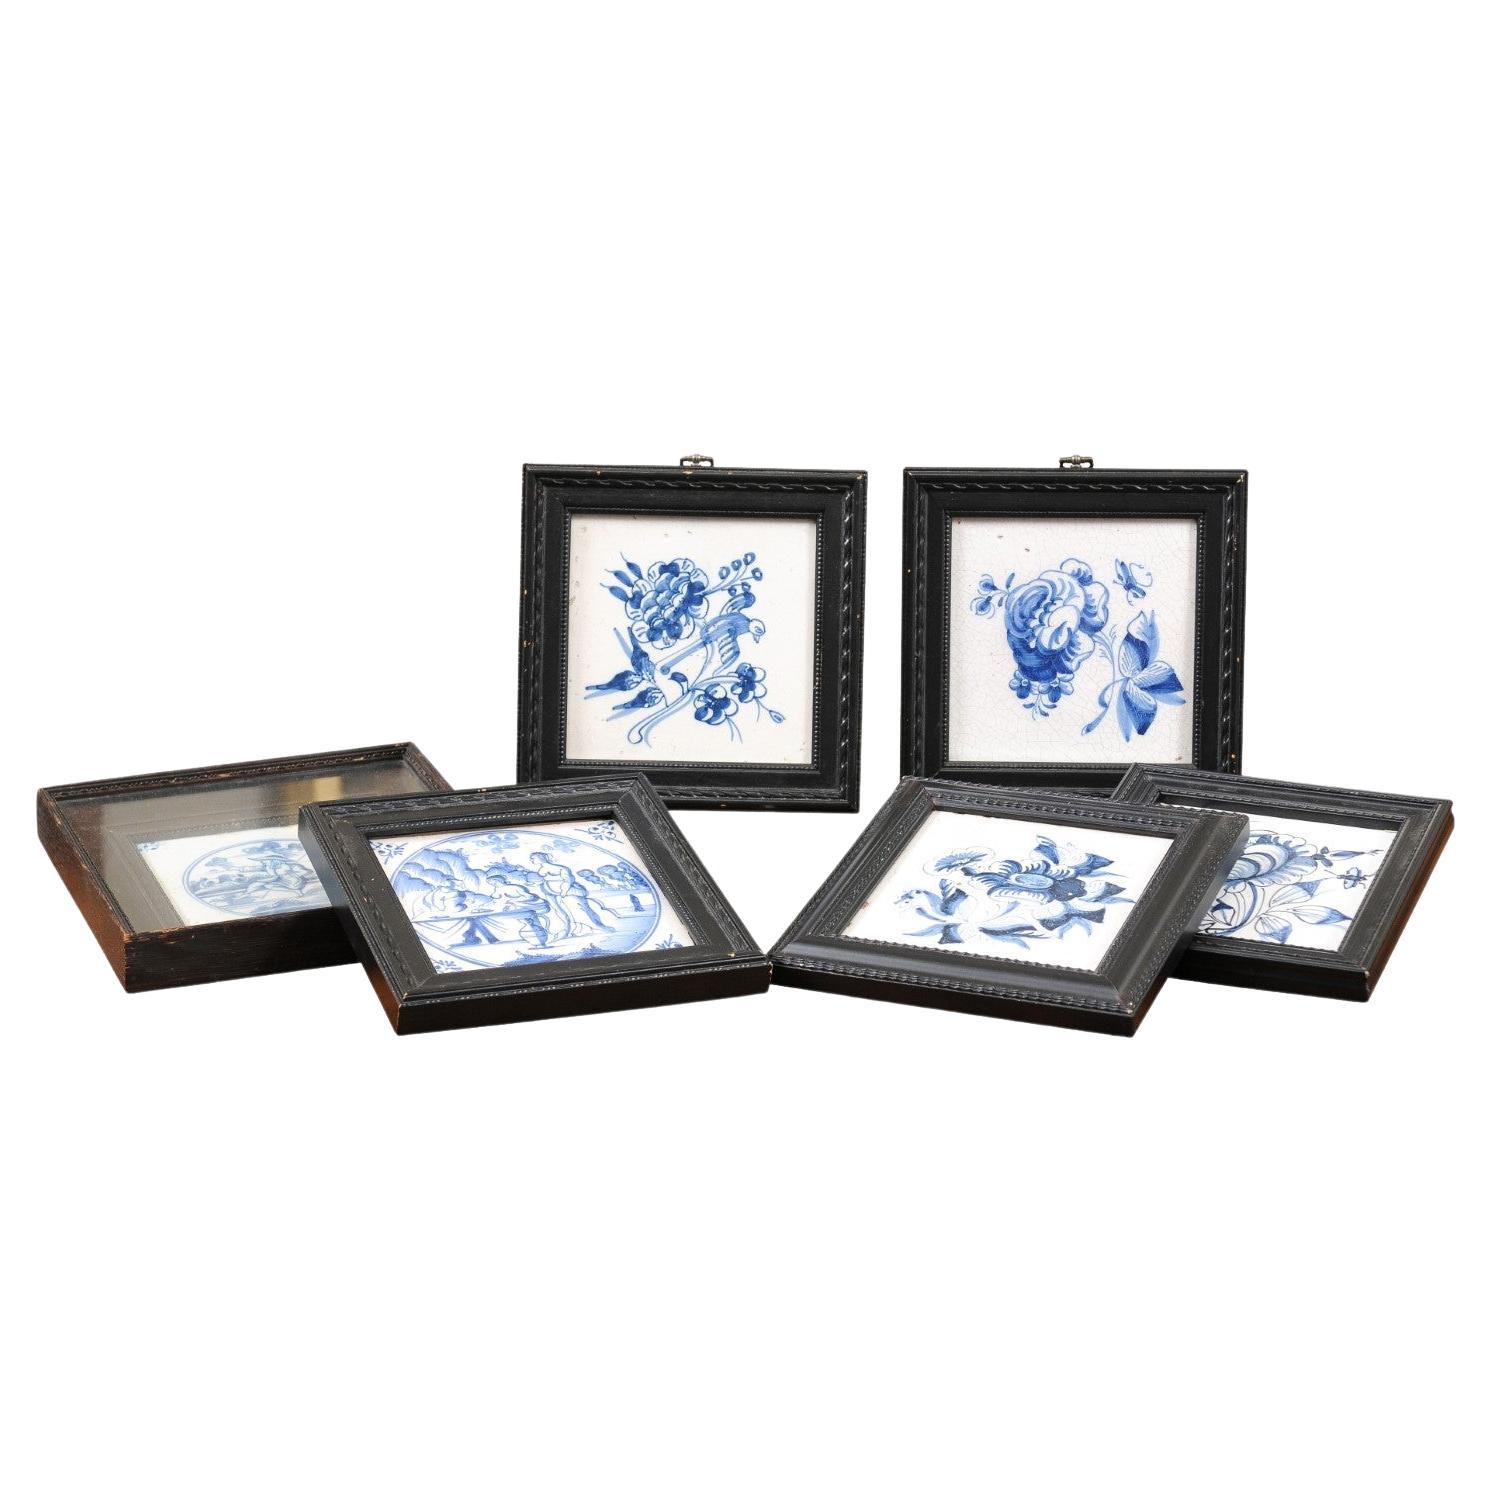  Set of 6 Assorted 18th Century Blue & White Delft Tiles in Black Frames